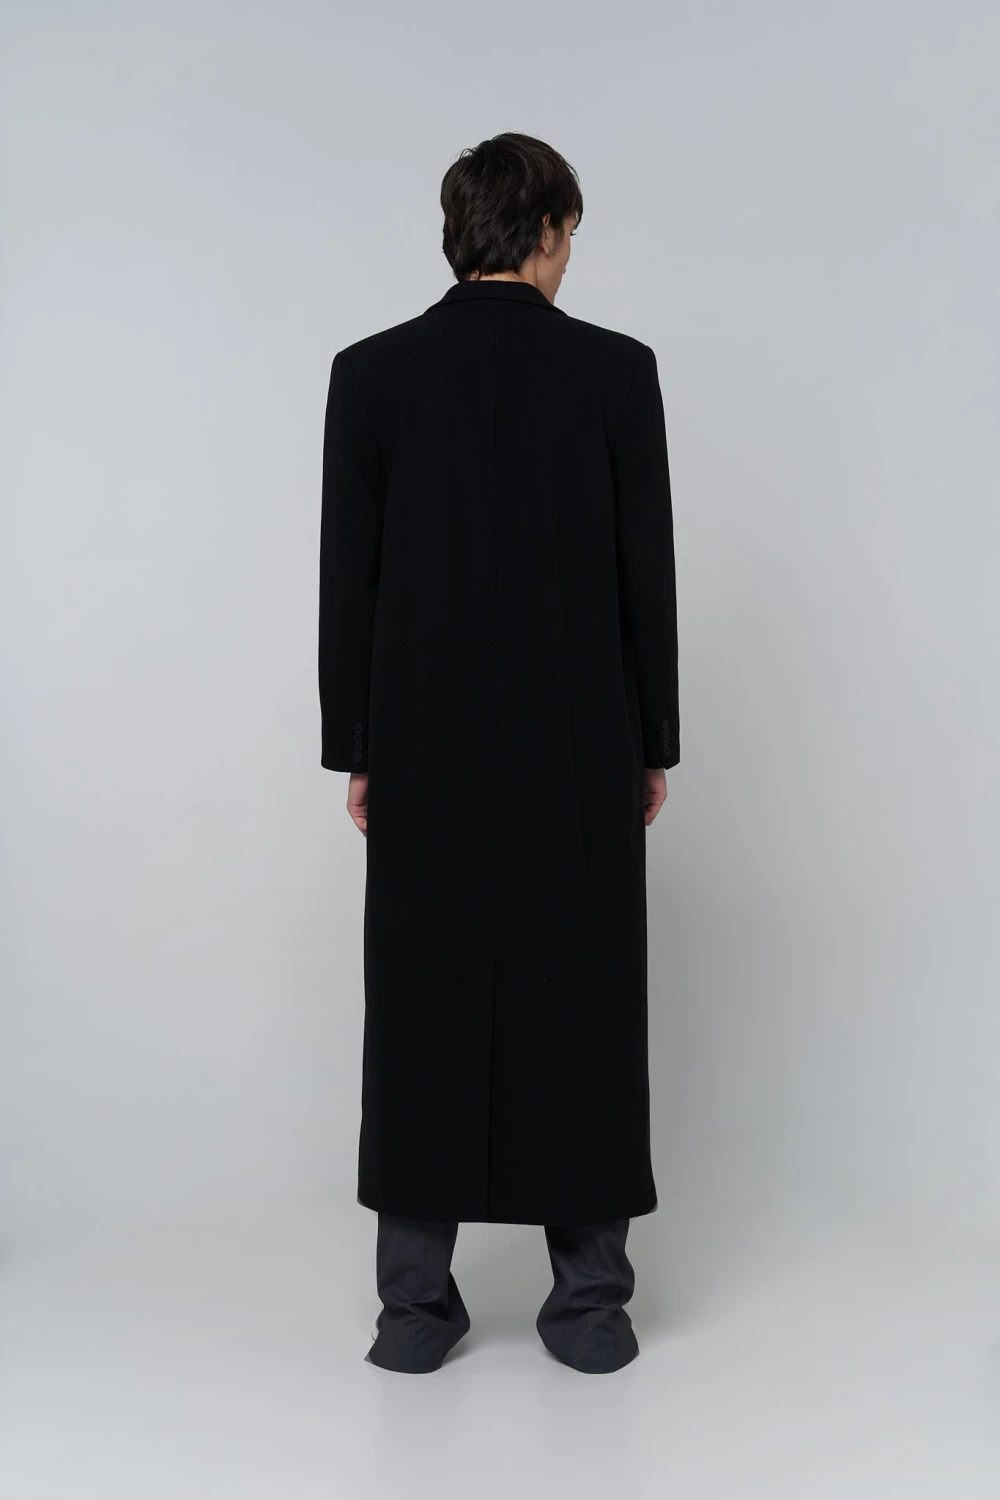 long coat in black color